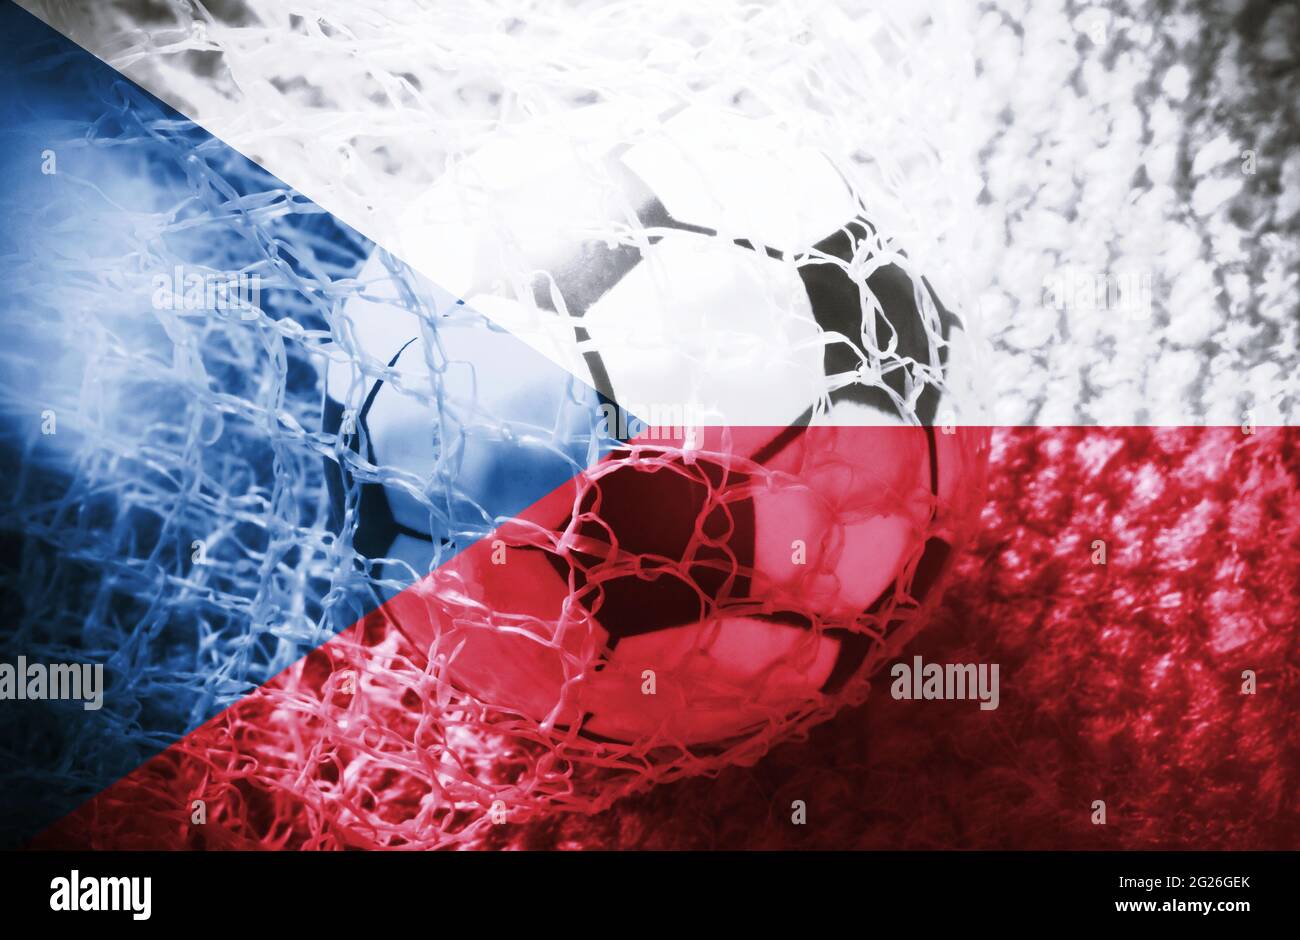 Soccer ball inside the net, with the Czech flag as background. Concept of Czech Republic Soccer team Stock Photo